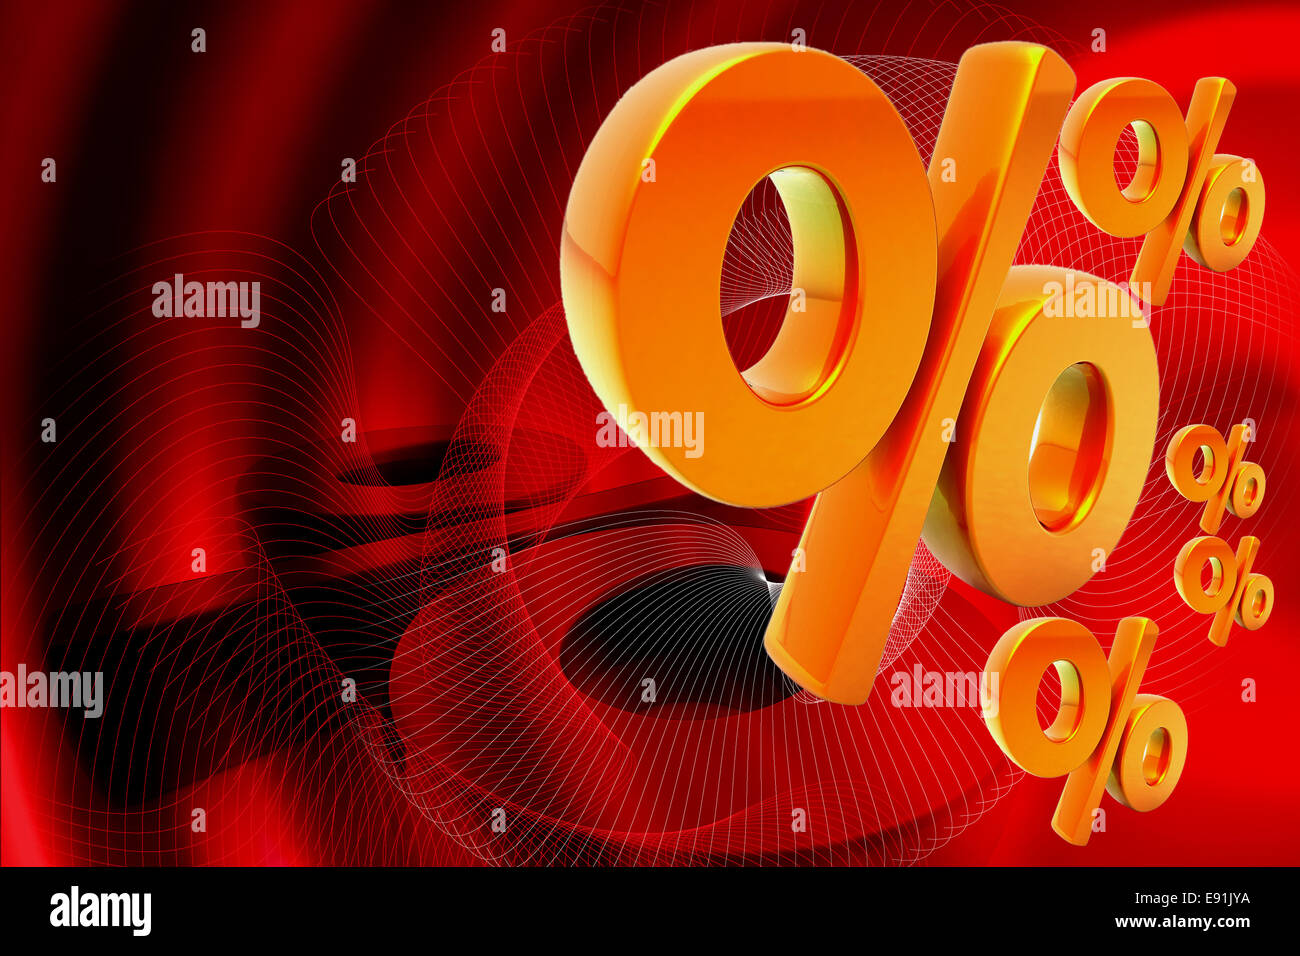 percentage Stock Photo